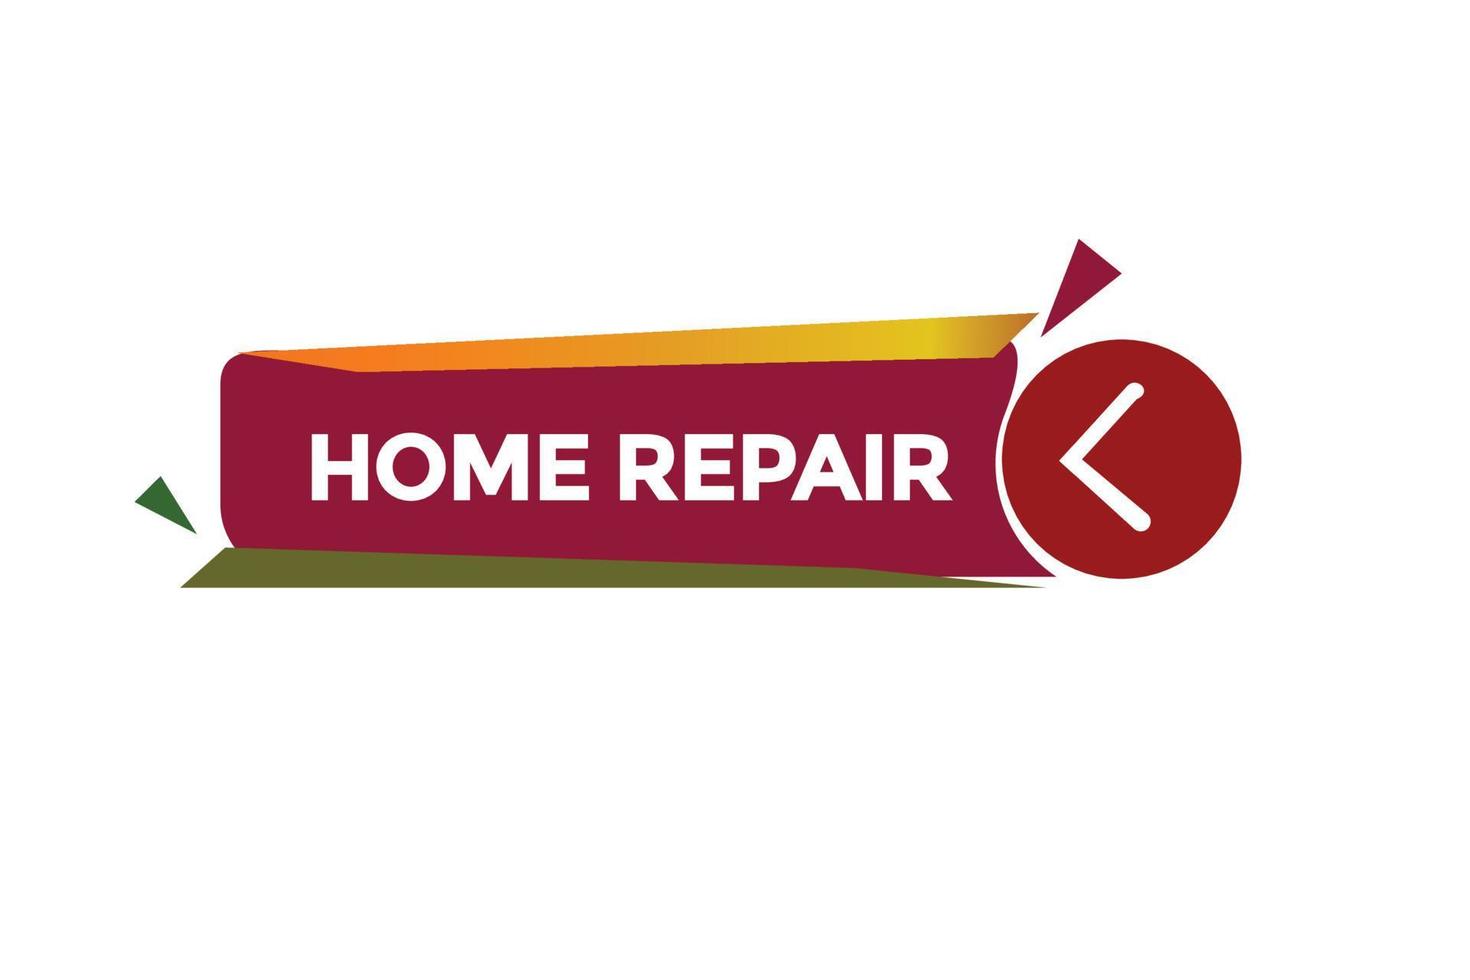 home repair vectors.sign label bubble speech home repair vector